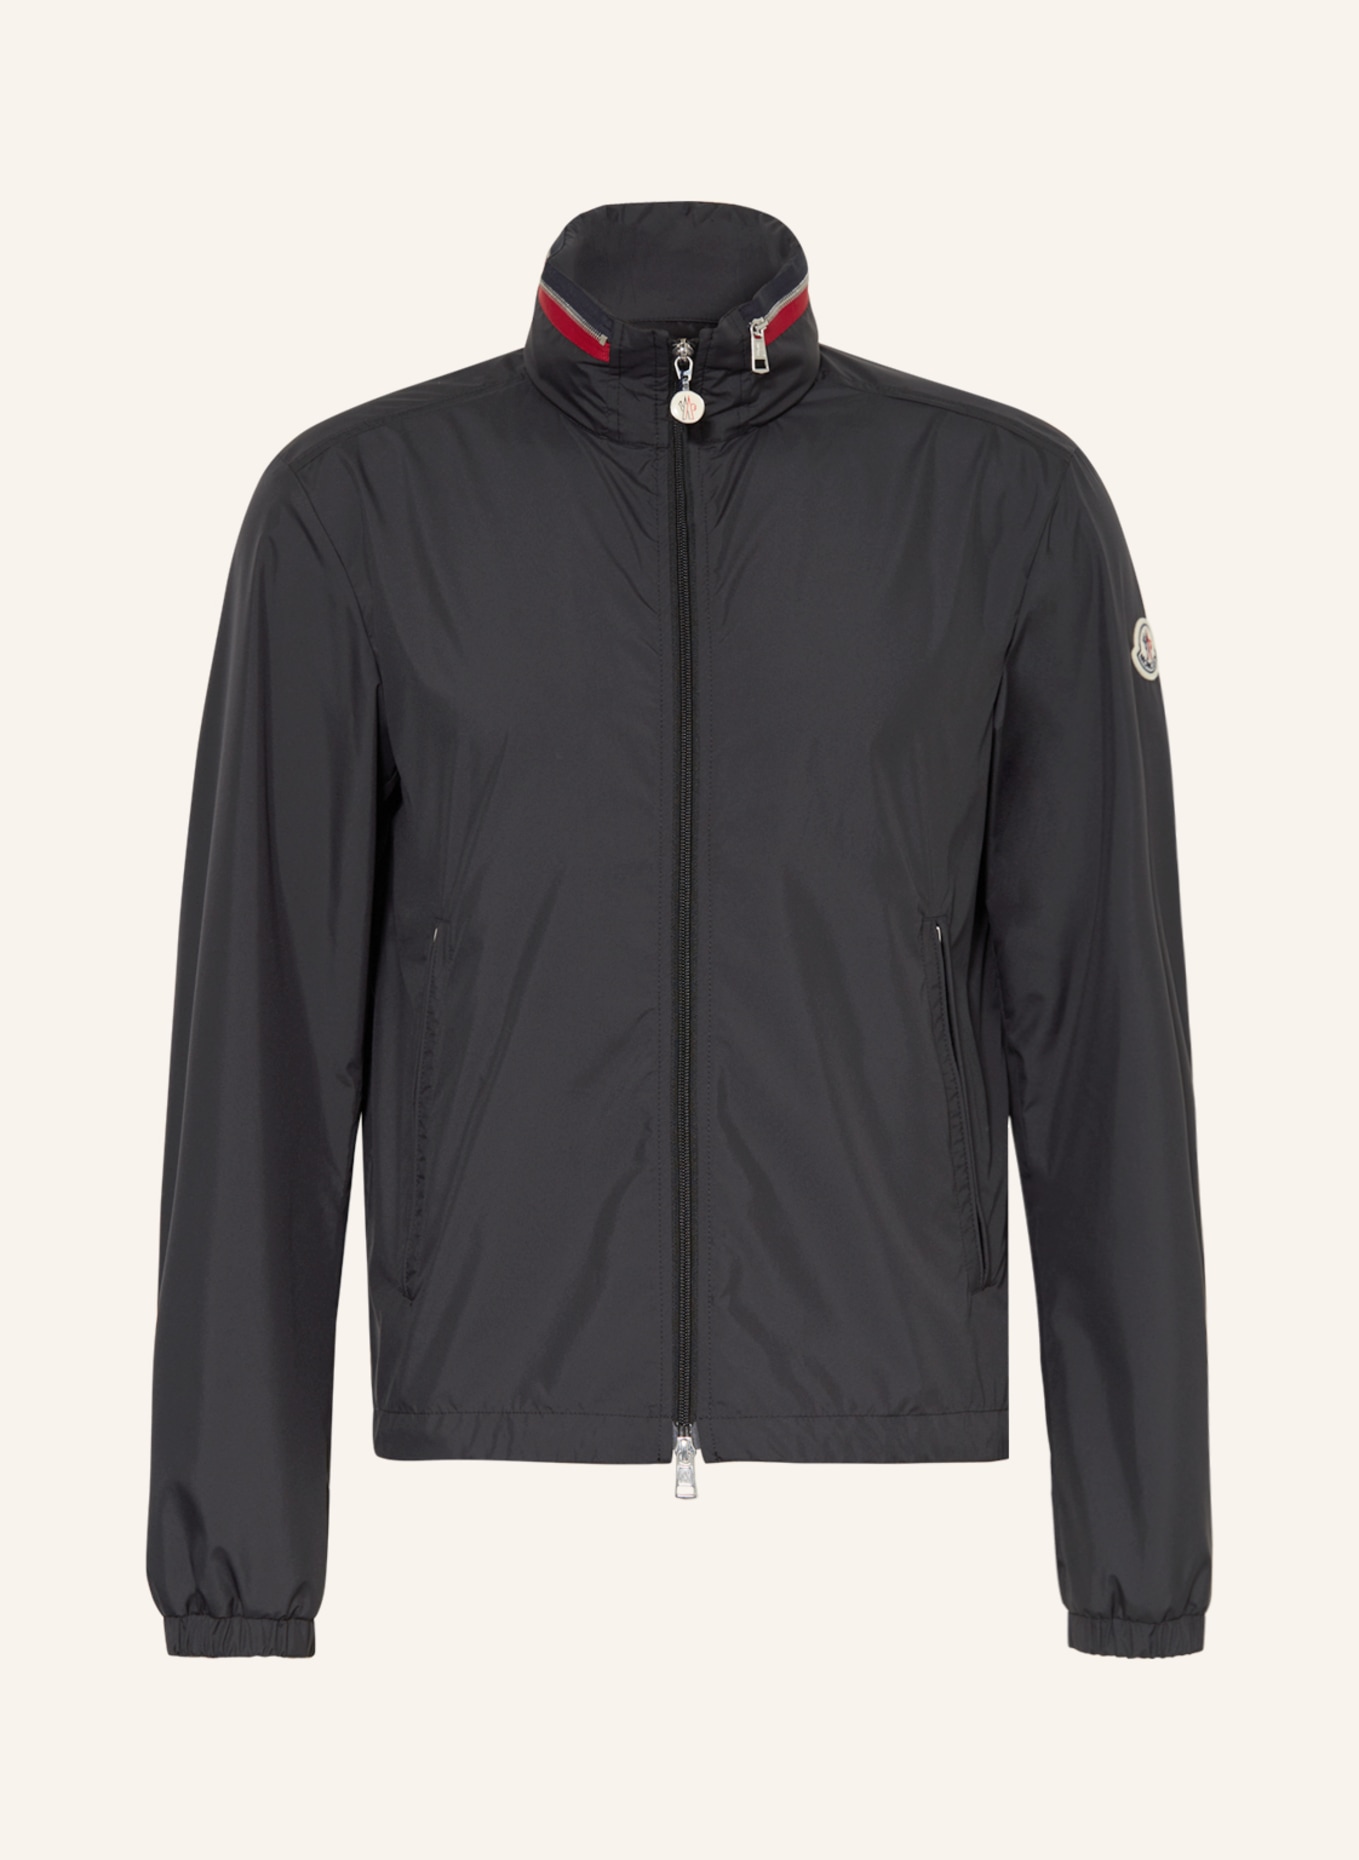 MONCLER Jacket FARLAK in black | Breuninger